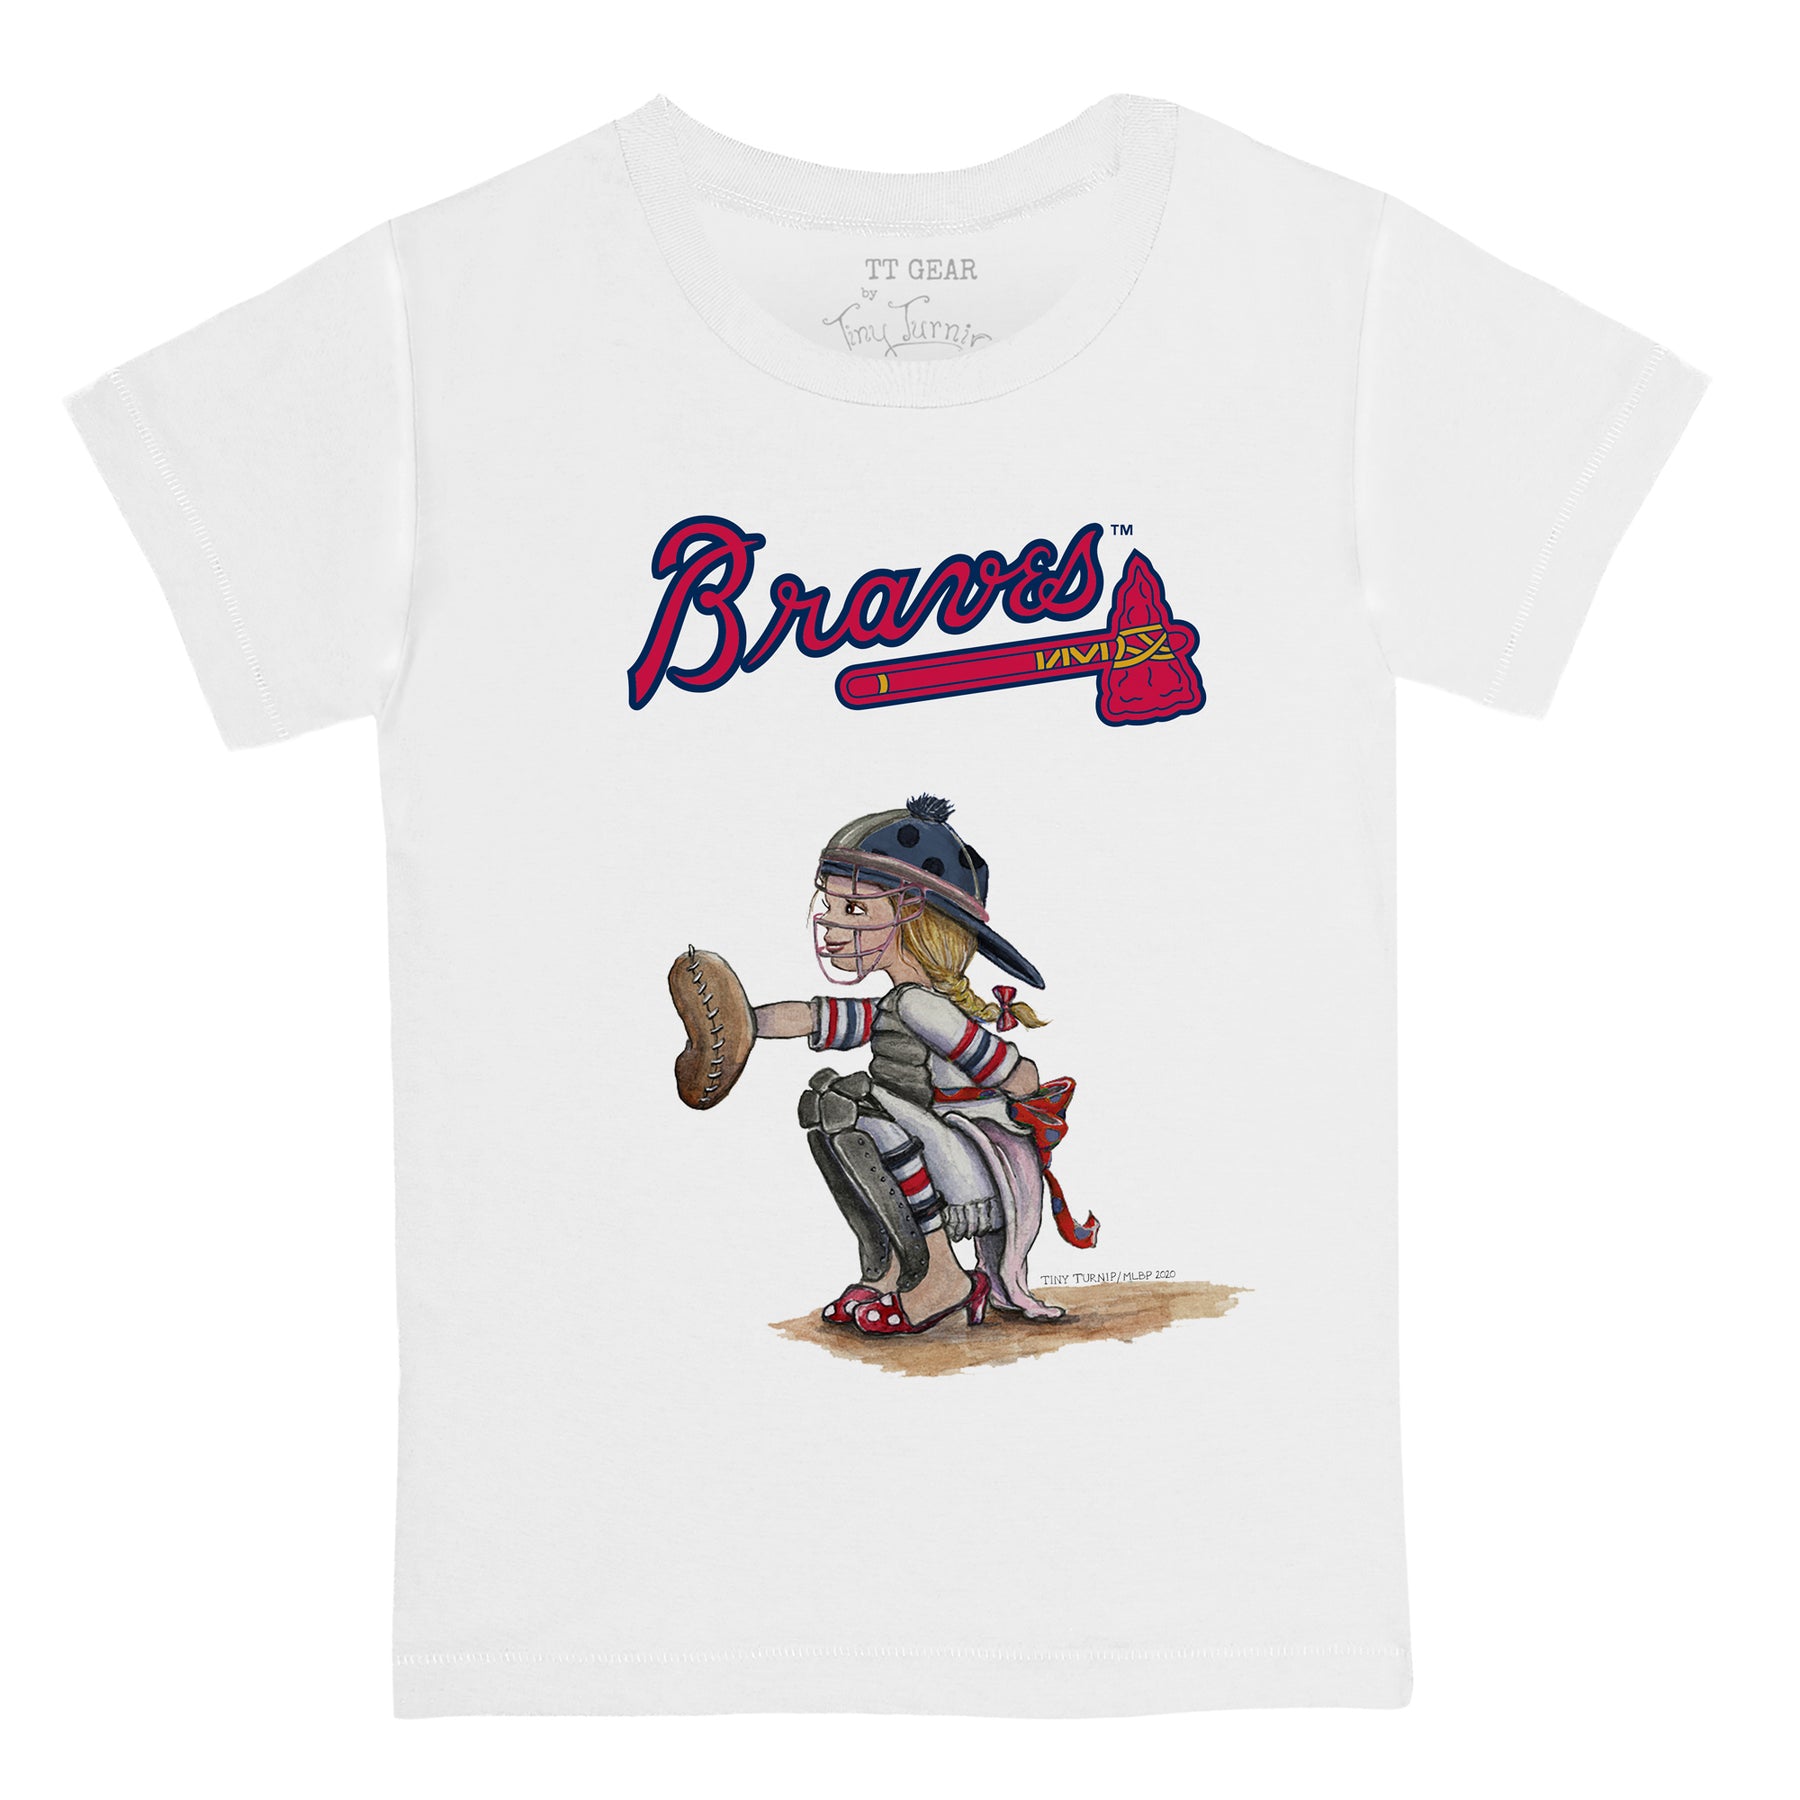 Atlanta Braves Apparel, Braves Jersey, Braves Clothing and Gear